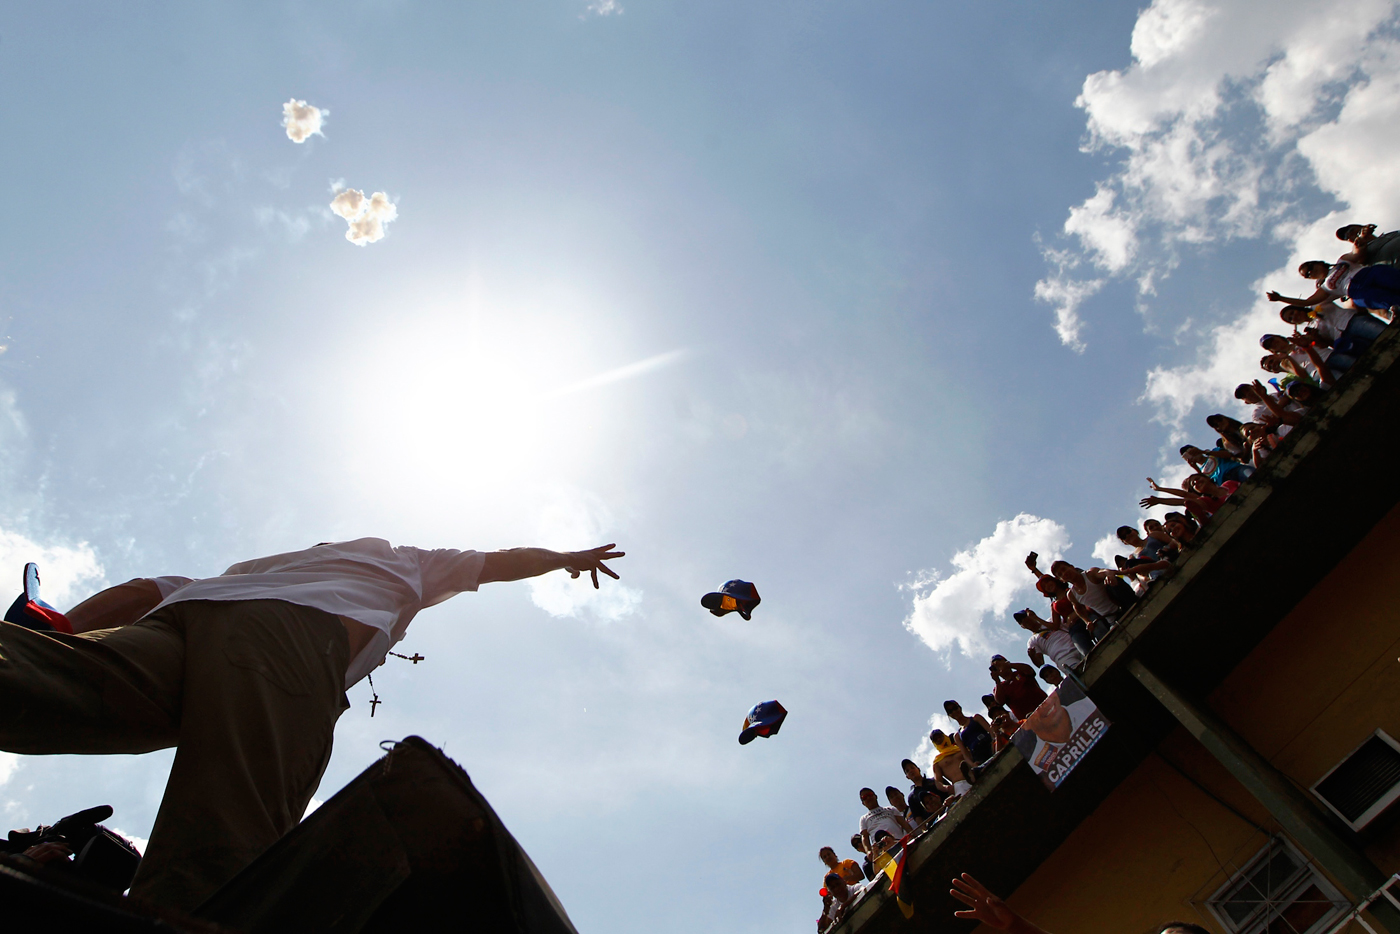 Mira como Capriles lanza la gorra (Impresionante foto)